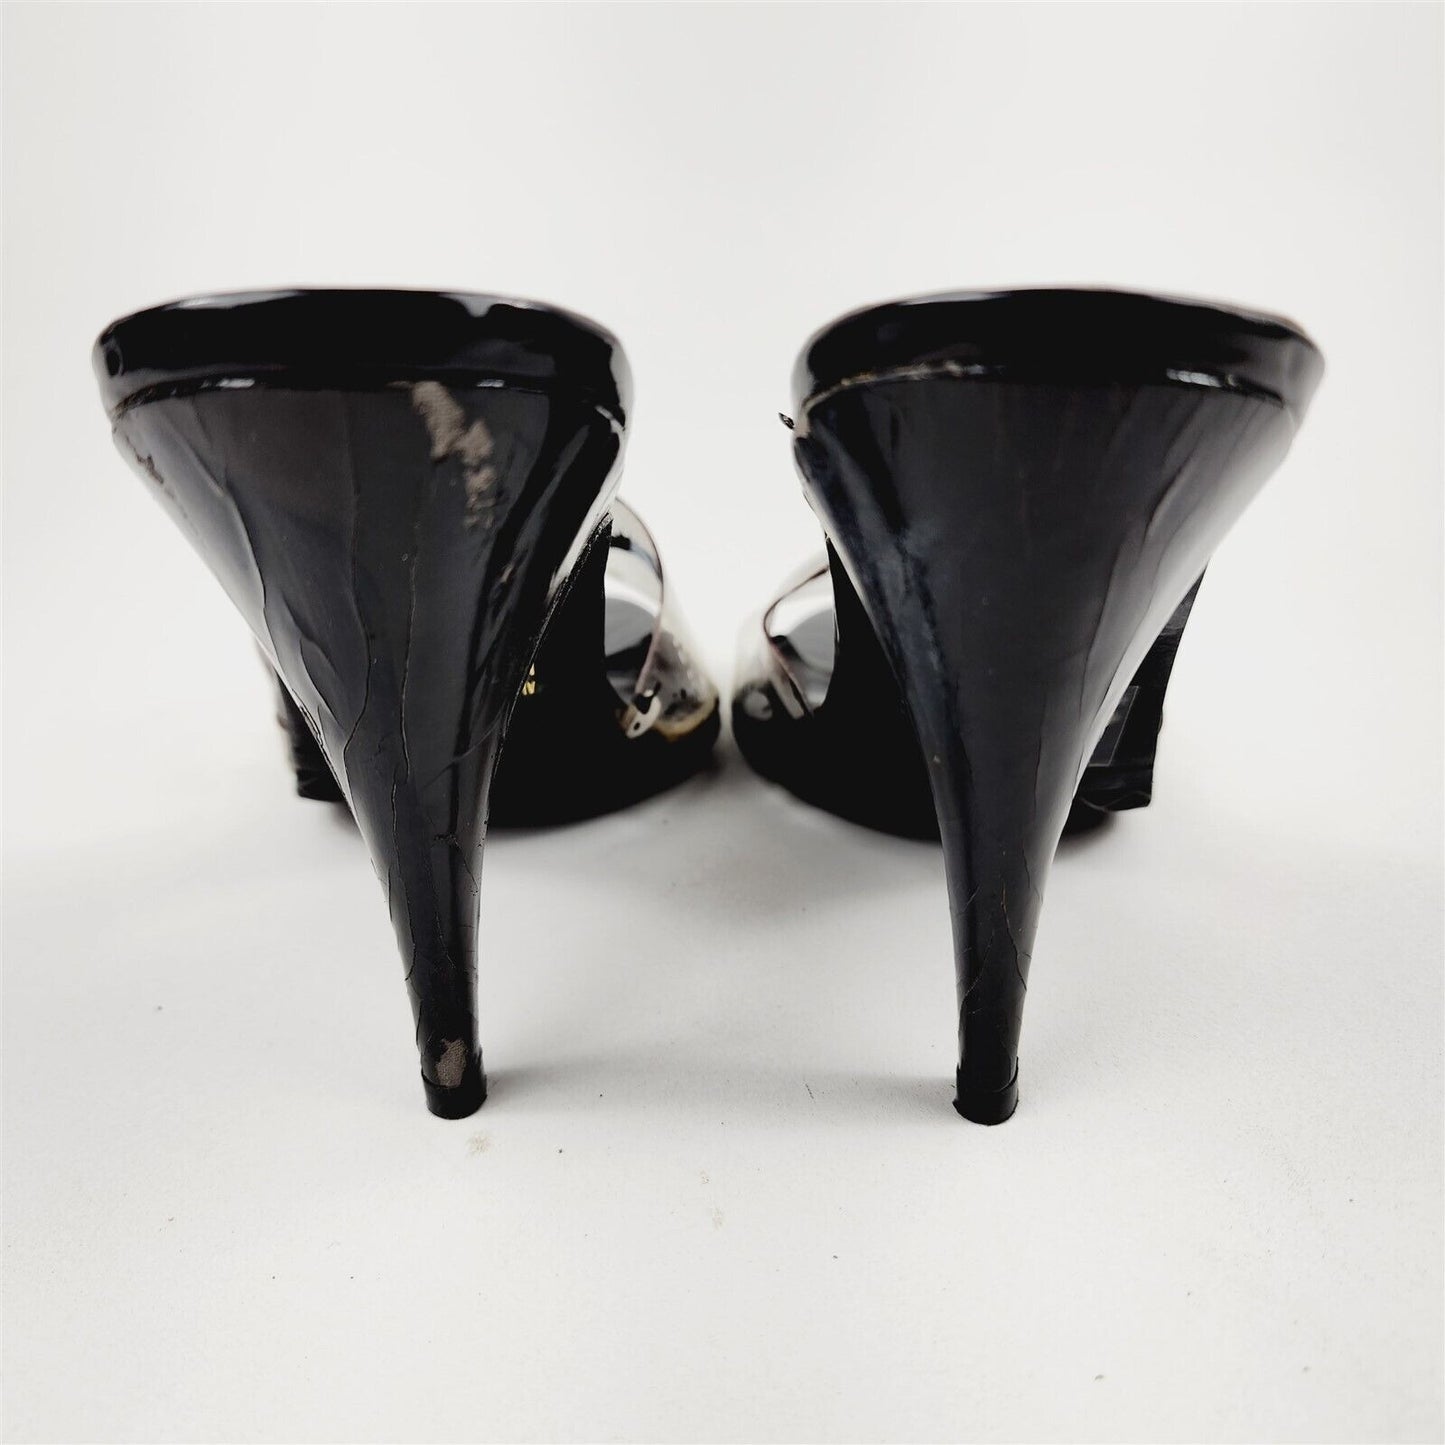 Vintage French Navy Black & White Paint Splatter Heels Shoes Pumps Size 7.5